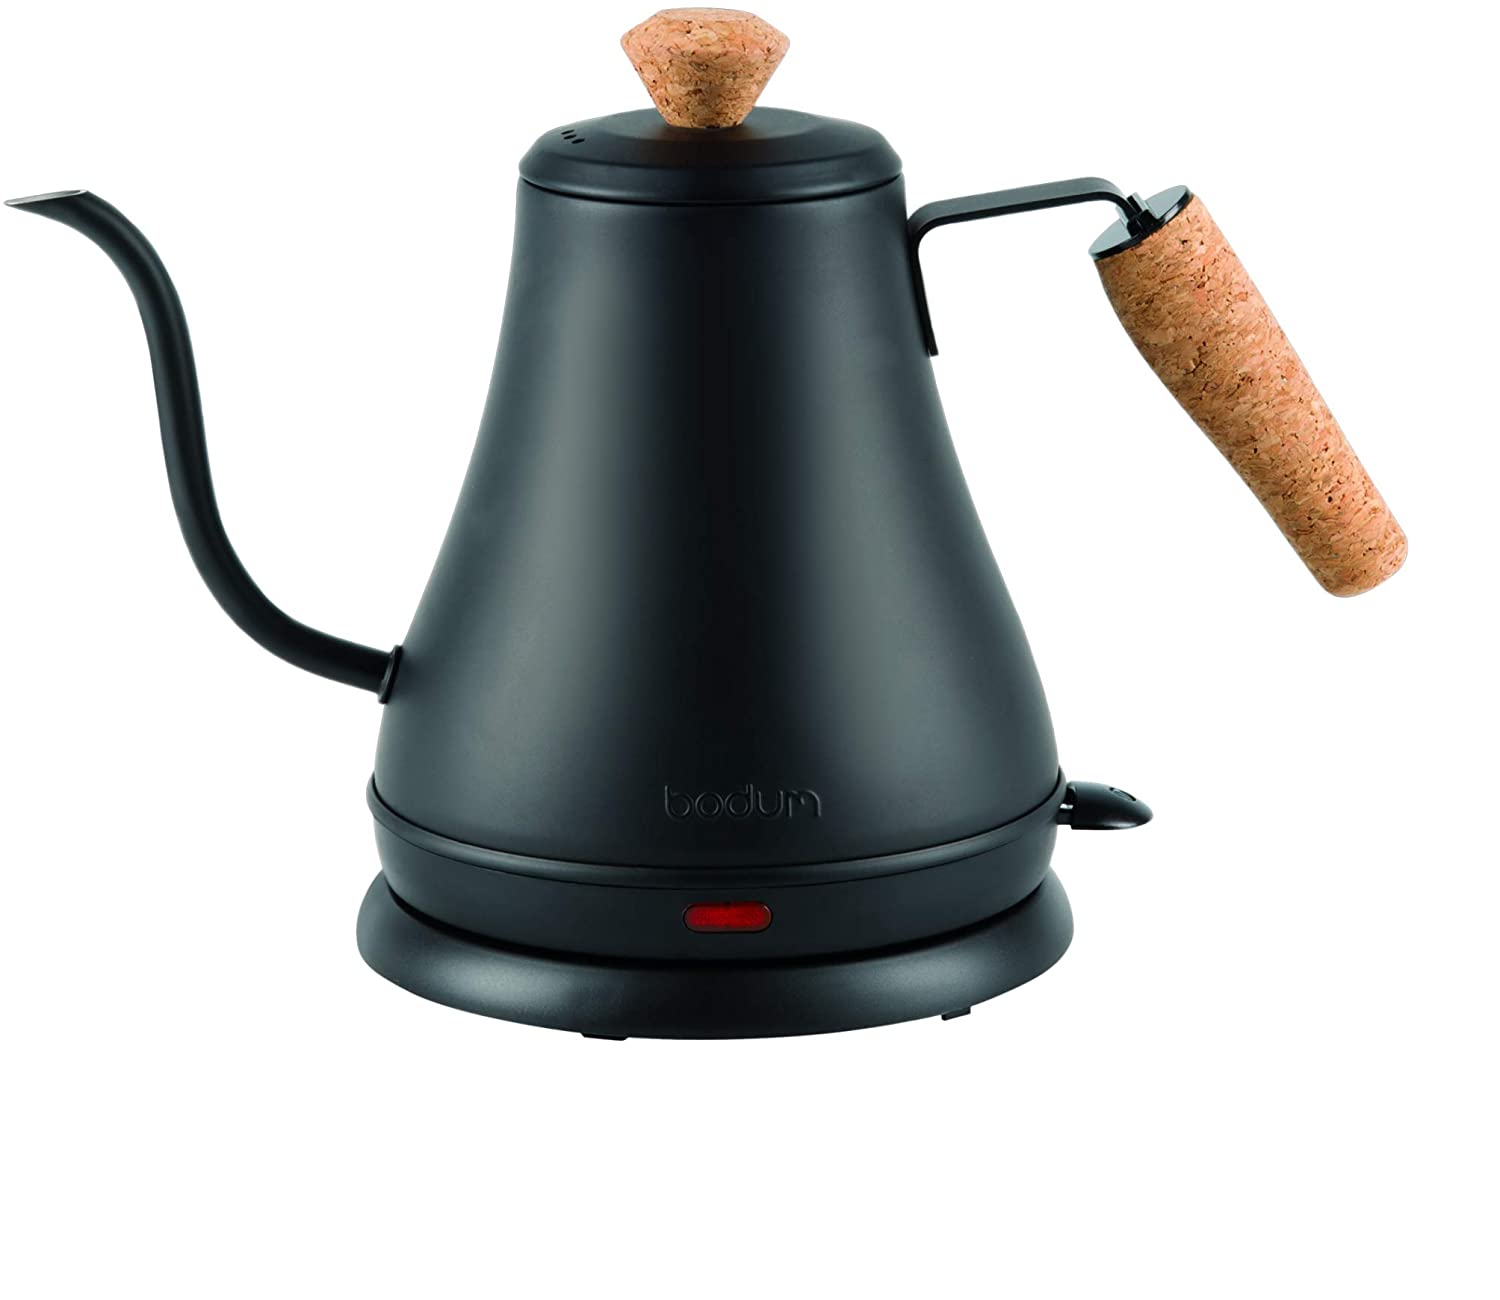 https://www.dontwasteyourmoney.com/wp-content/uploads/2020/04/bodum-melior-gooseneck-electric-water-kettle-electric-kettle-for-coffee.jpg